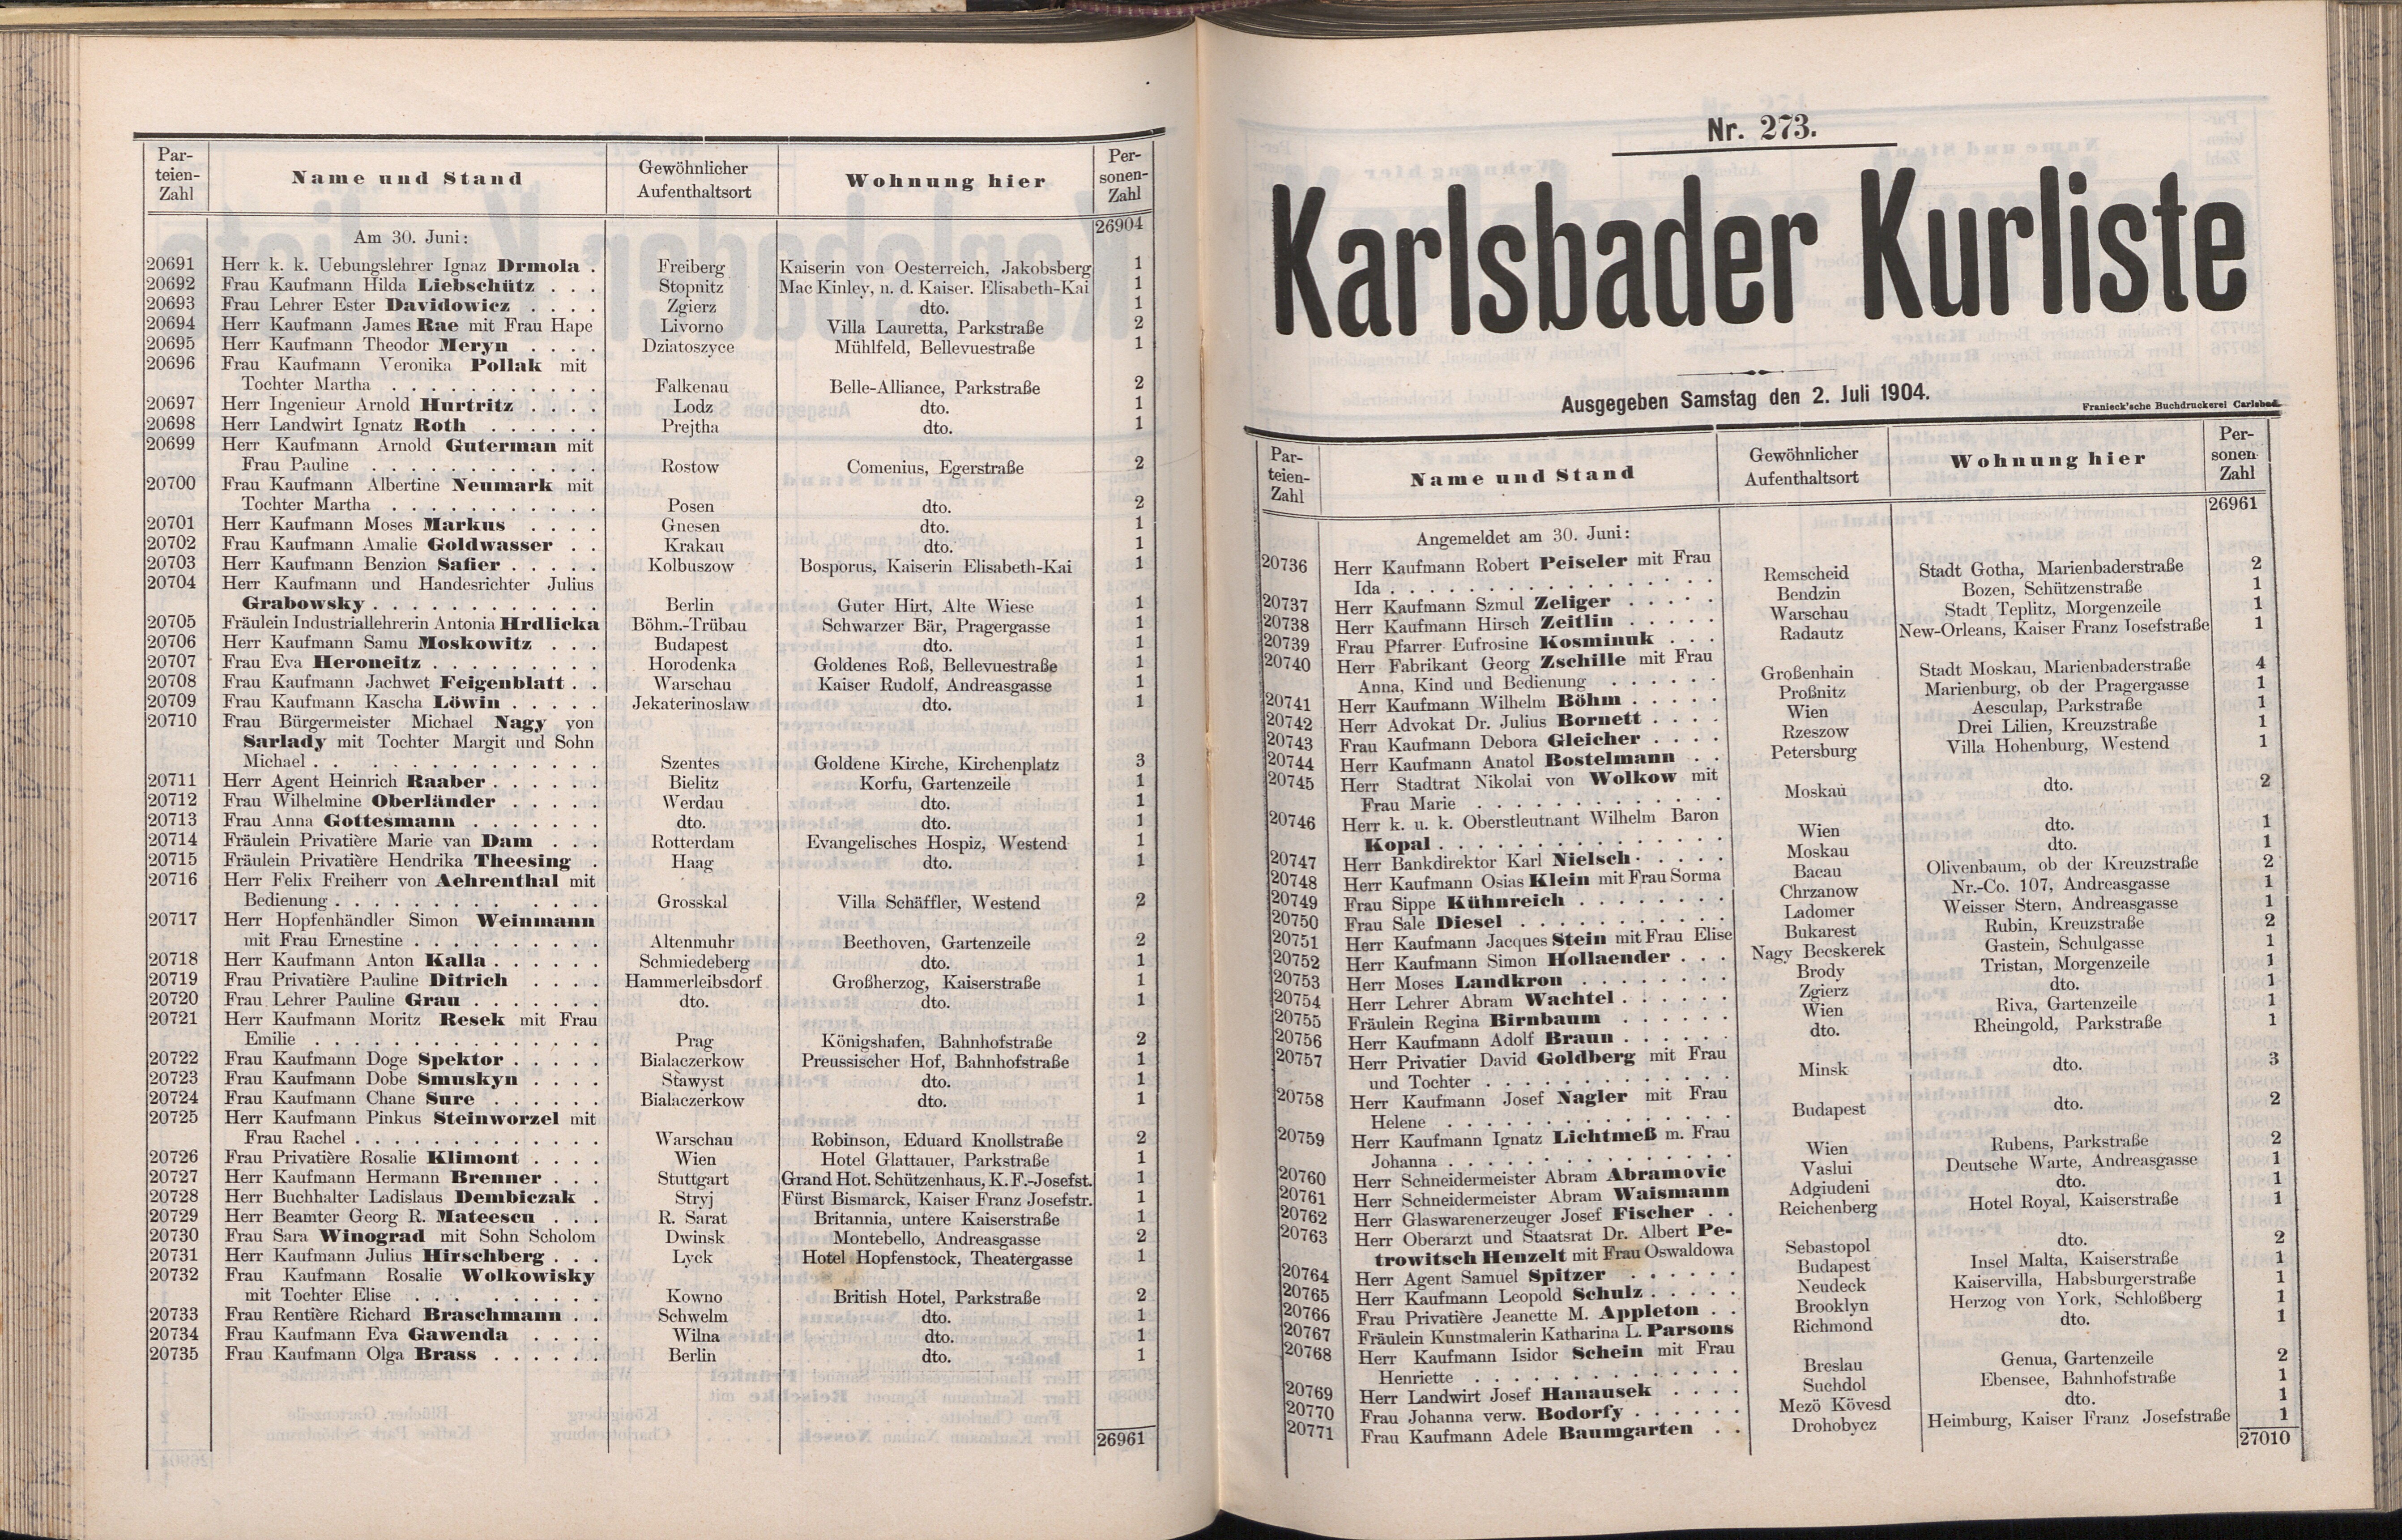 295. soap-kv_knihovna_karlsbader-kurliste-1904_2960